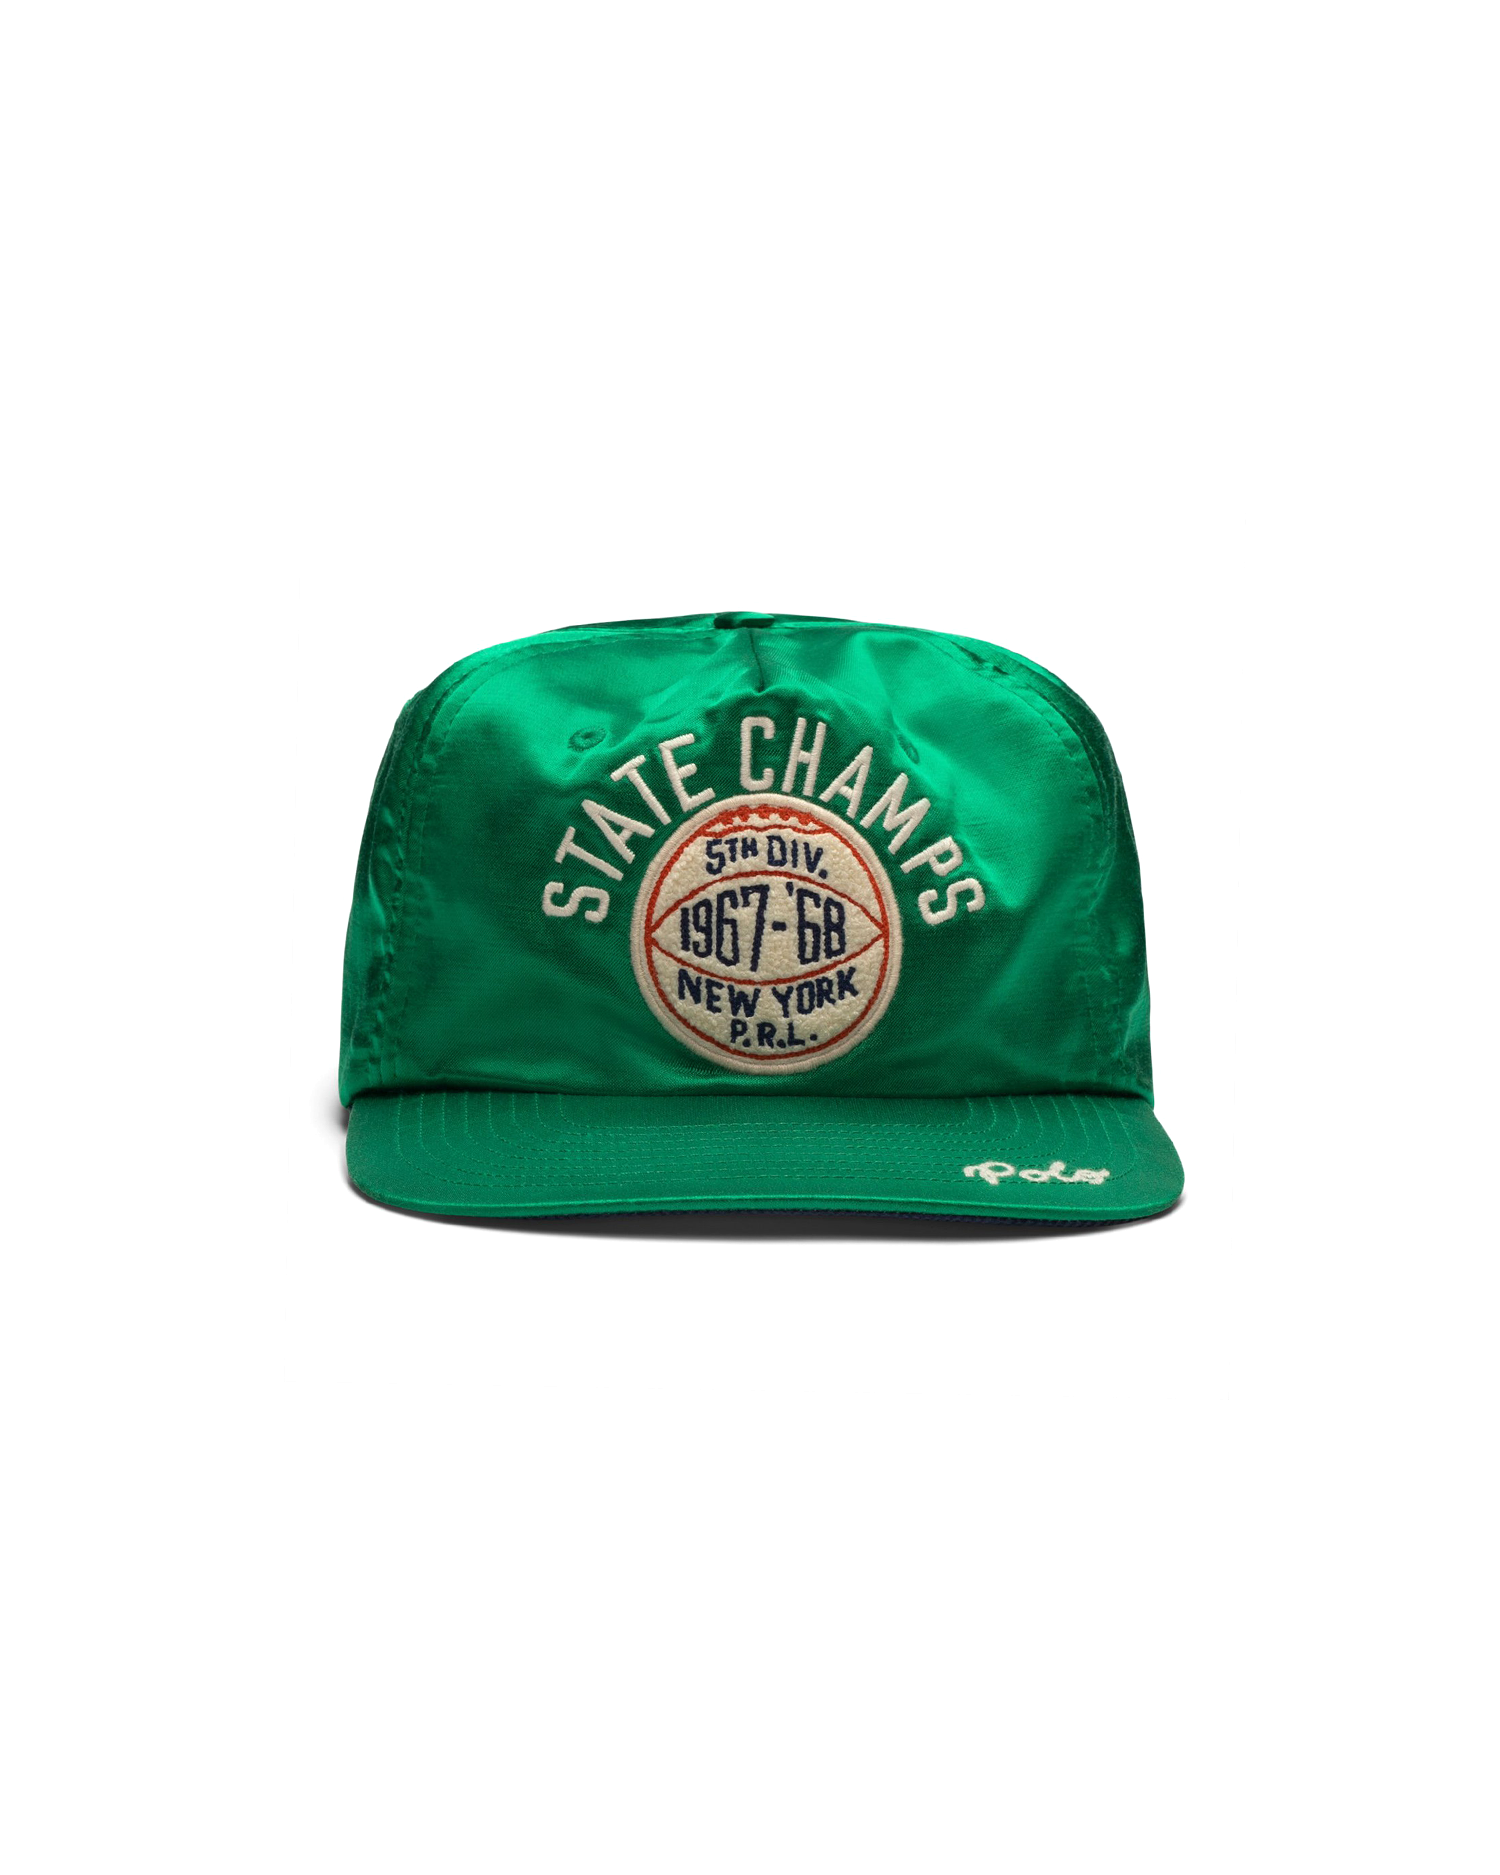 New York Baseball Cap - Green